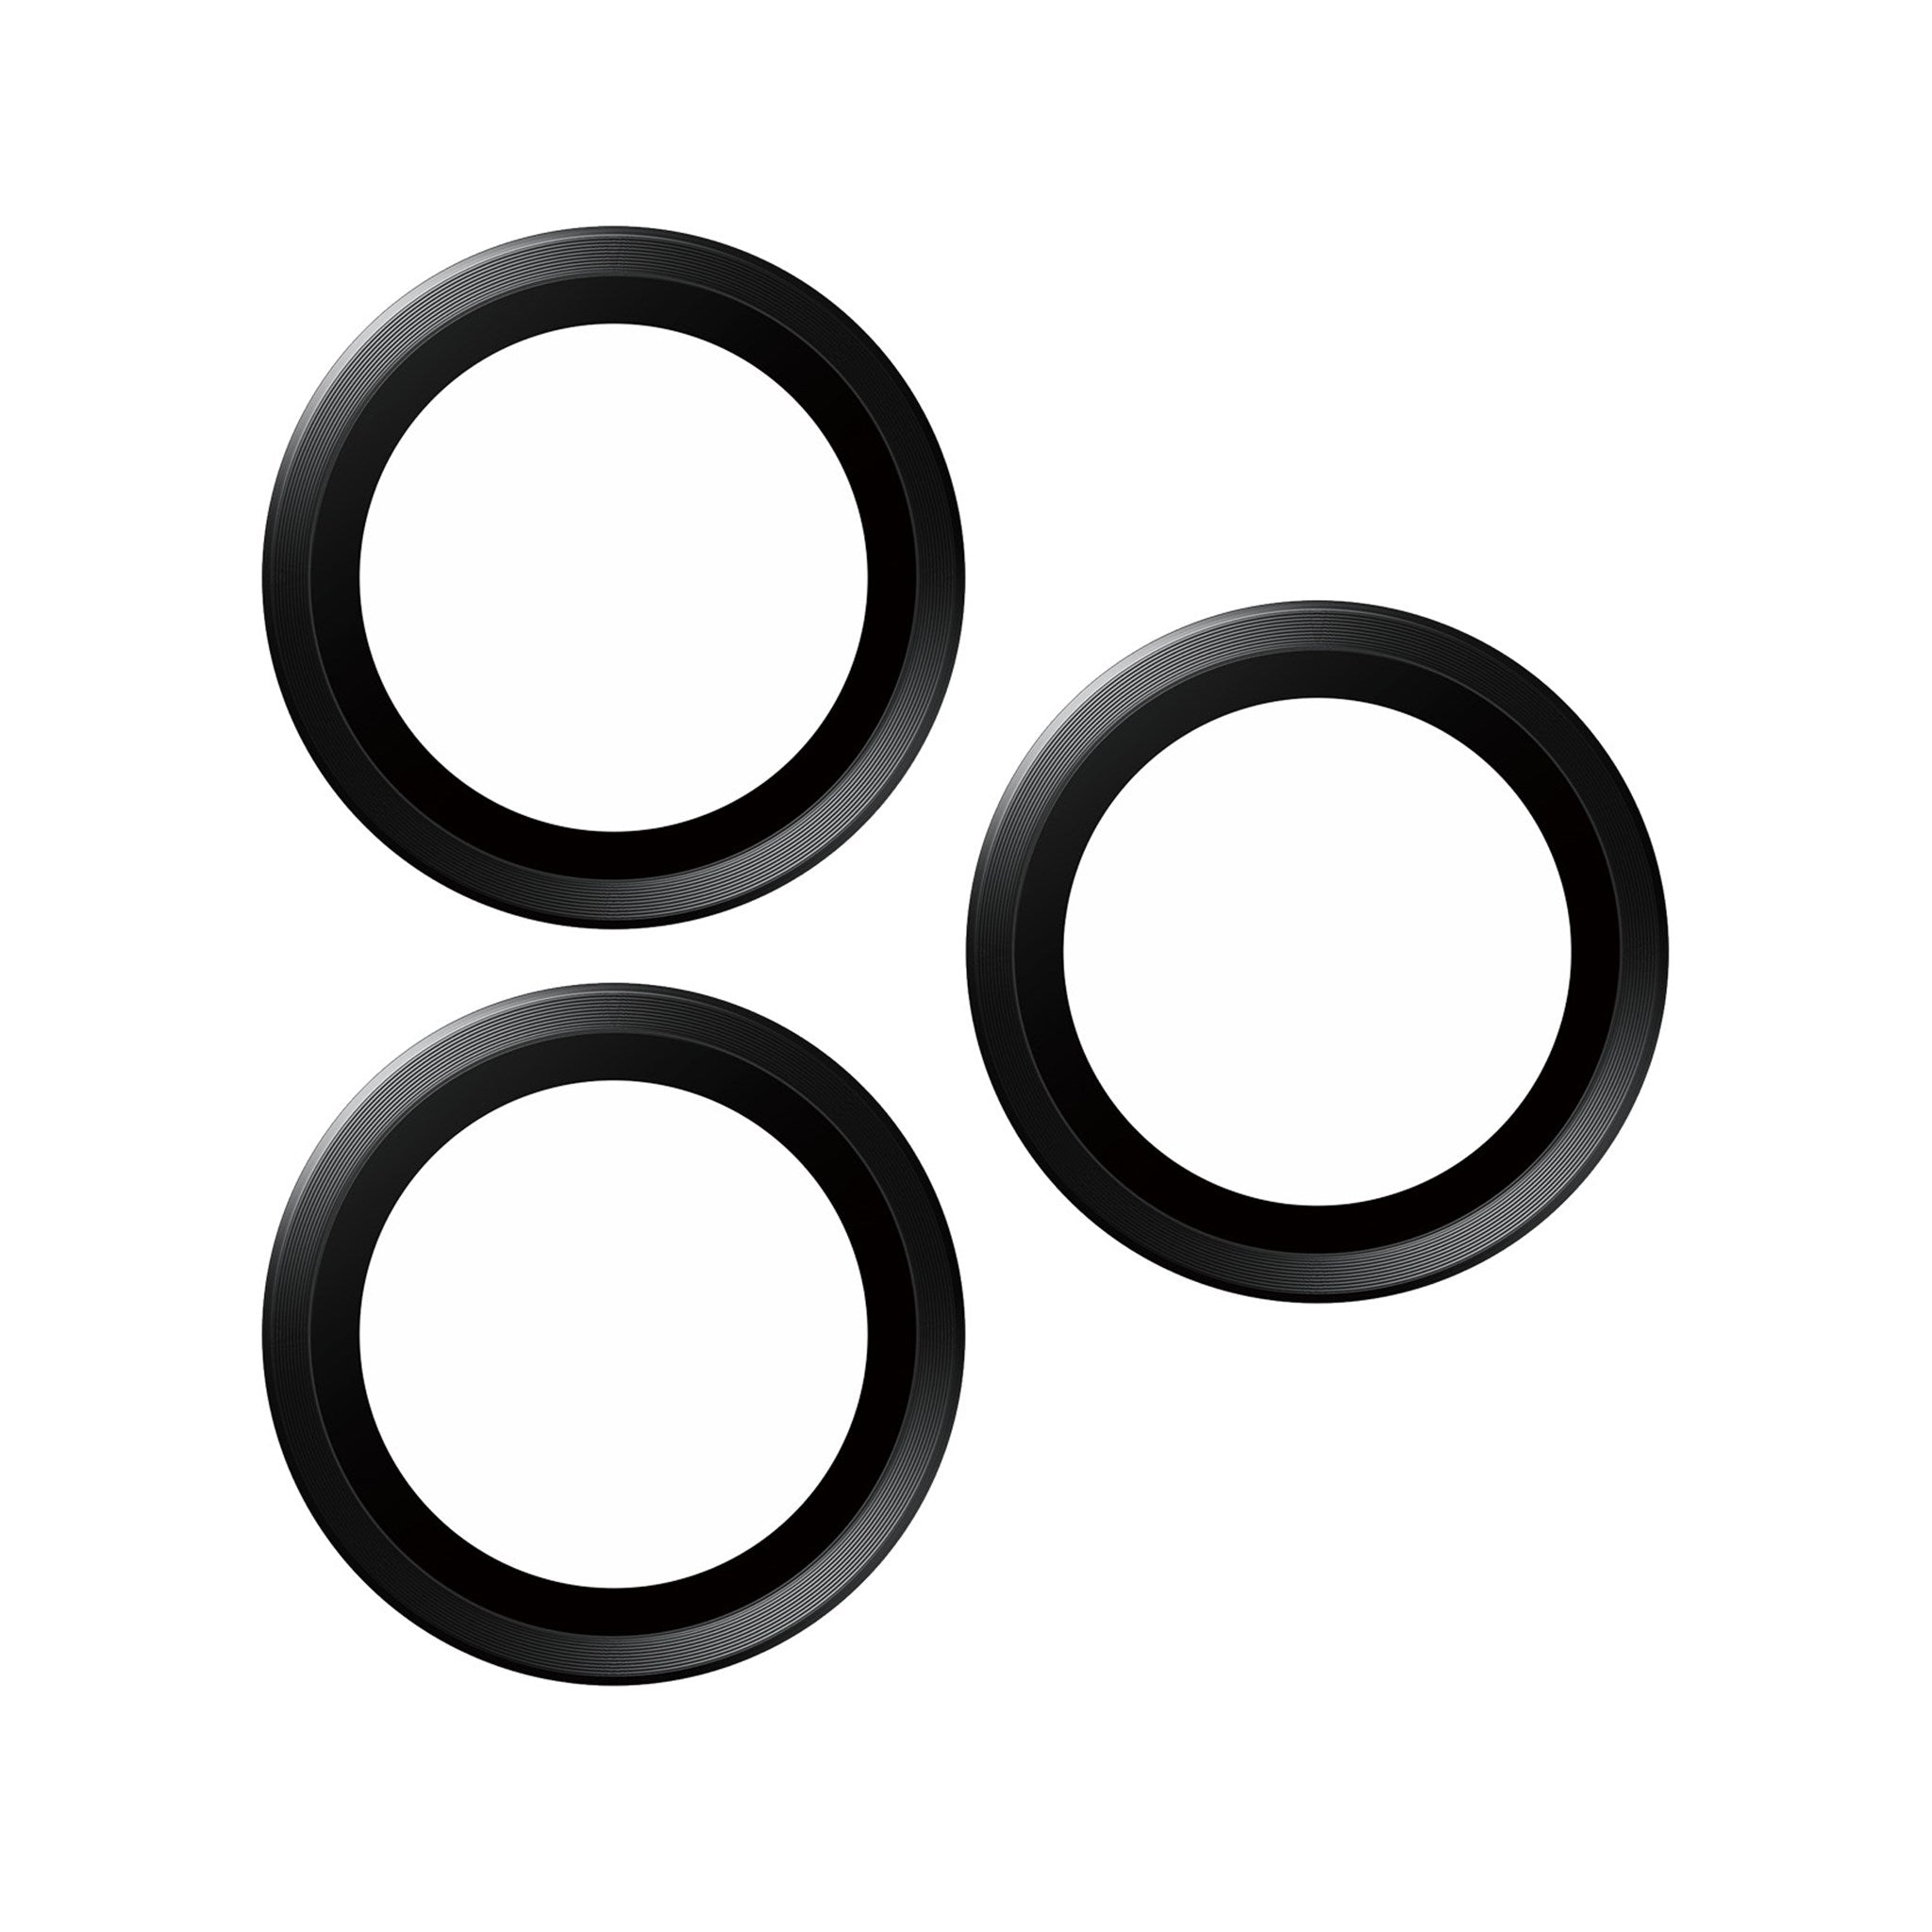 Apple iPhone 15 PANZERGLASS Pro | Max) Hoops™ Kameraschutz Kameraschutz(für Pro 15